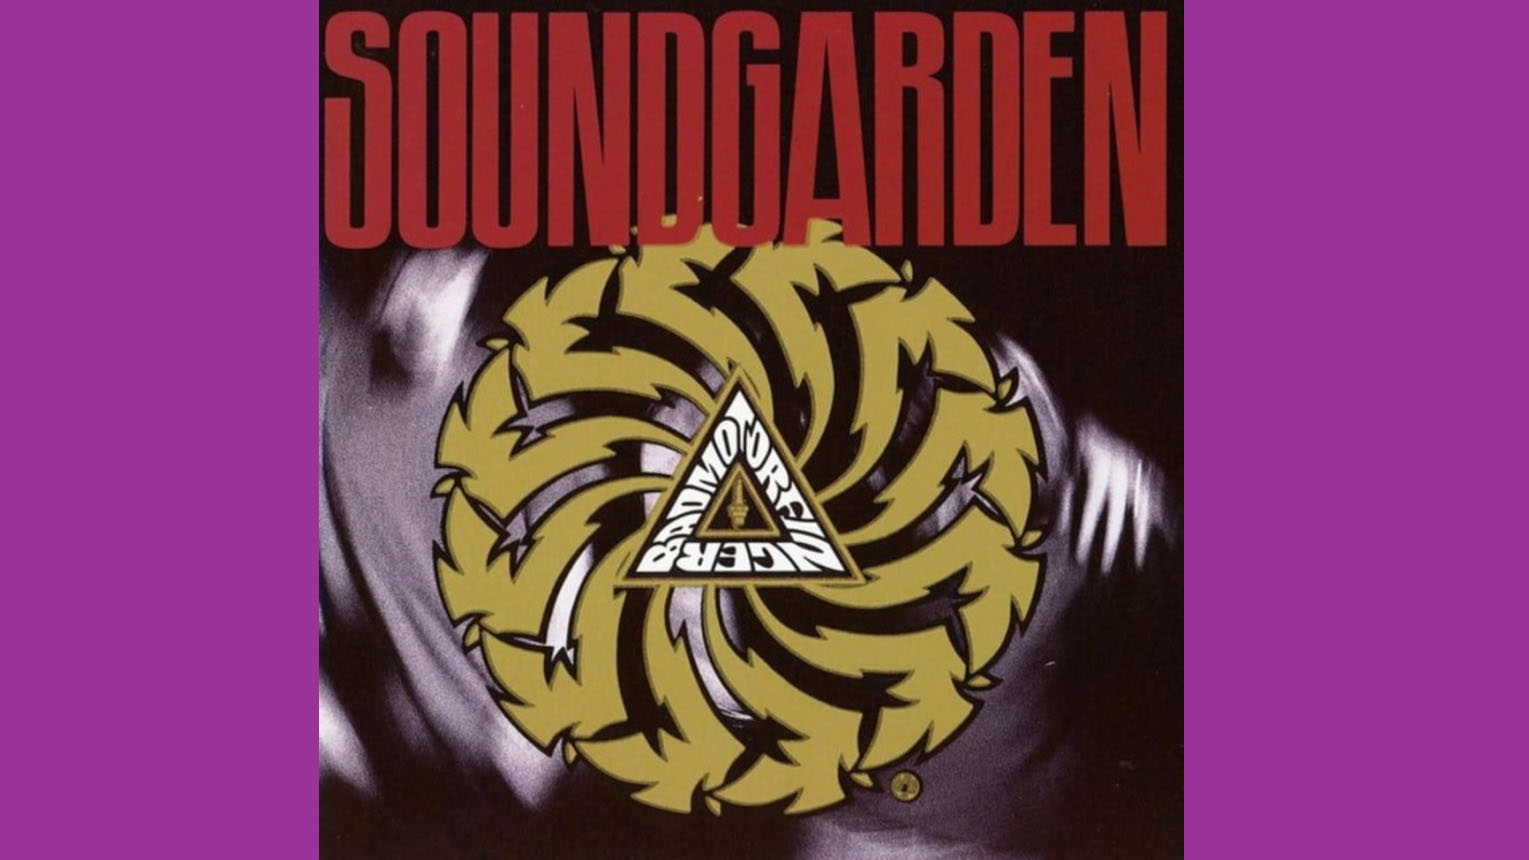 Nirvana, Pearl Jam, Soundgarden: 50 Best Grunge Albums